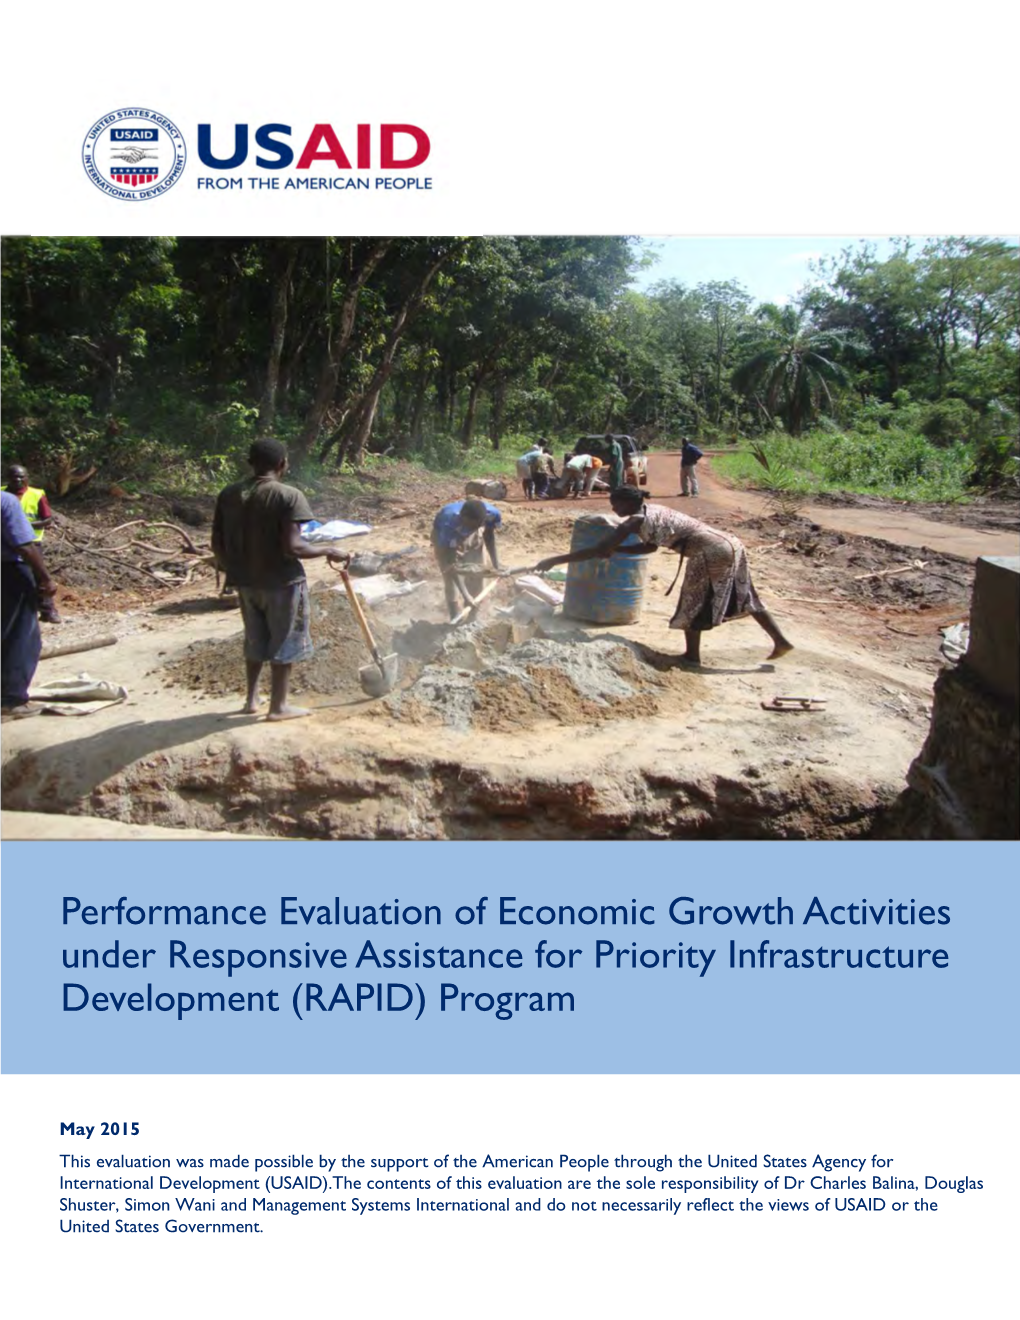 Performance Evaluation of Economic Growth Activities Under Responsive Assistance for Priority Infrastructure Development (RAPID) Program